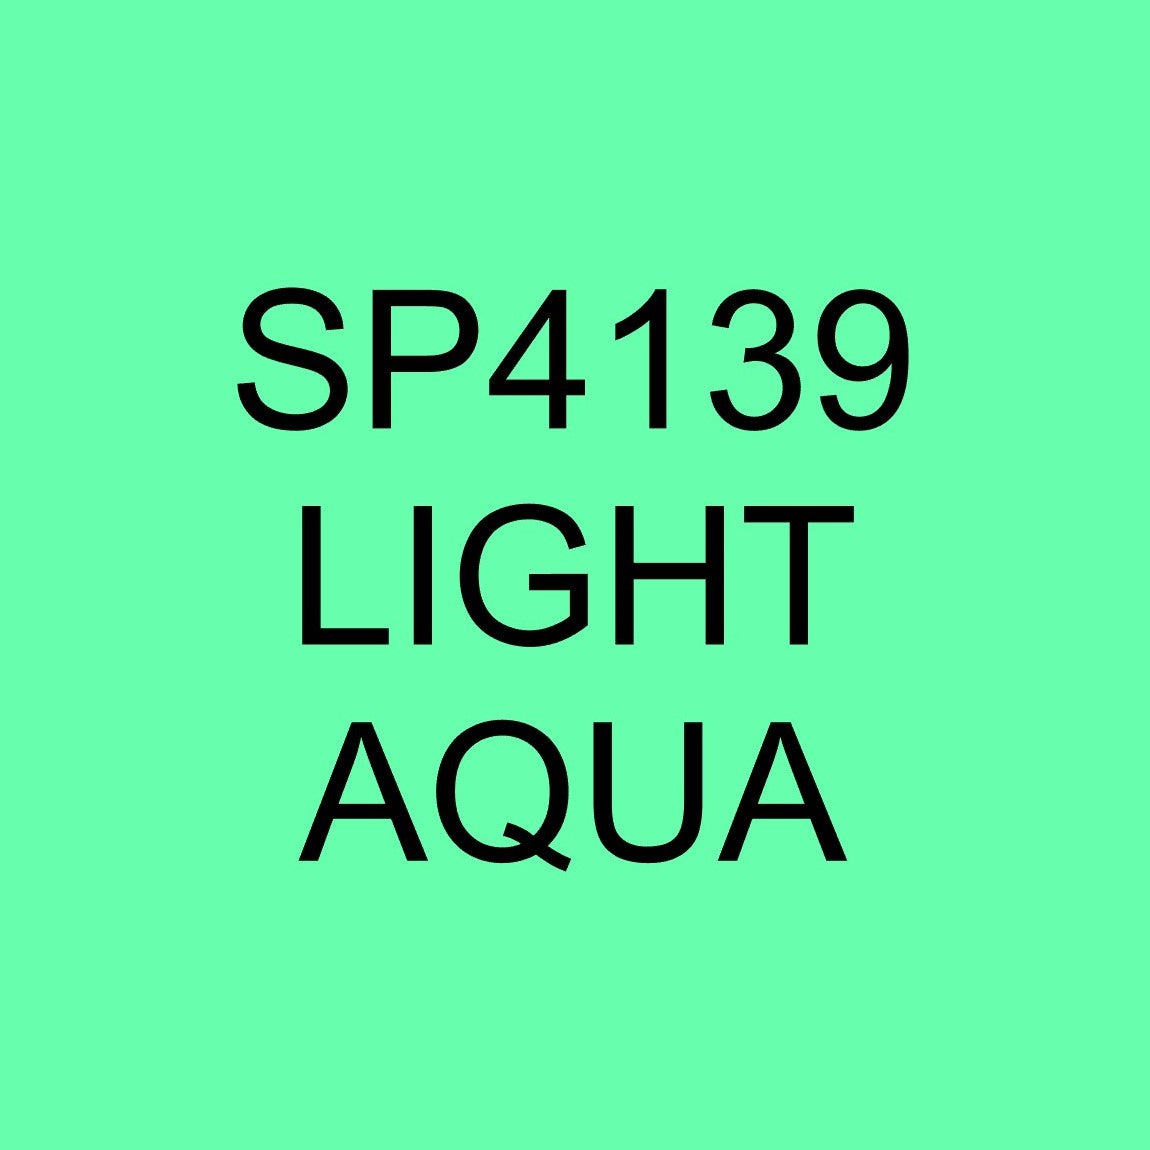 Superior SP4139 Light Aqua